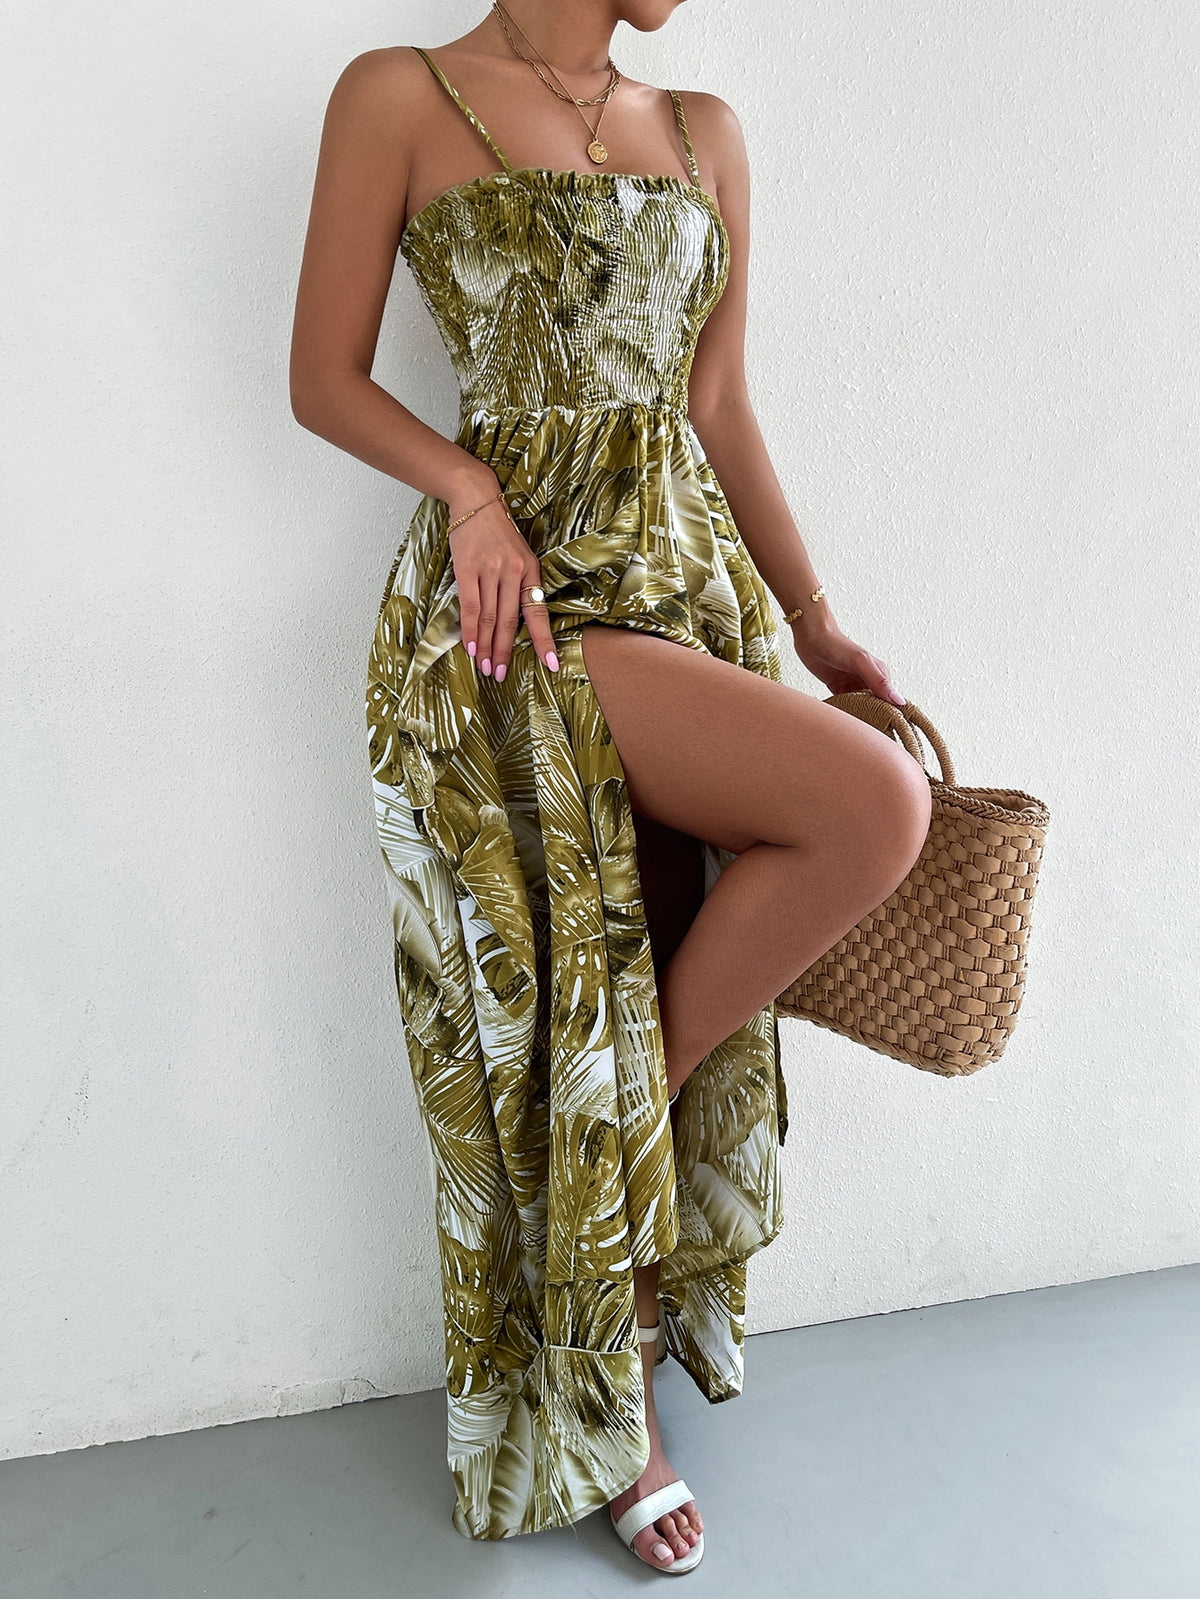 Shirred Cami Dress in Tropical Print - 